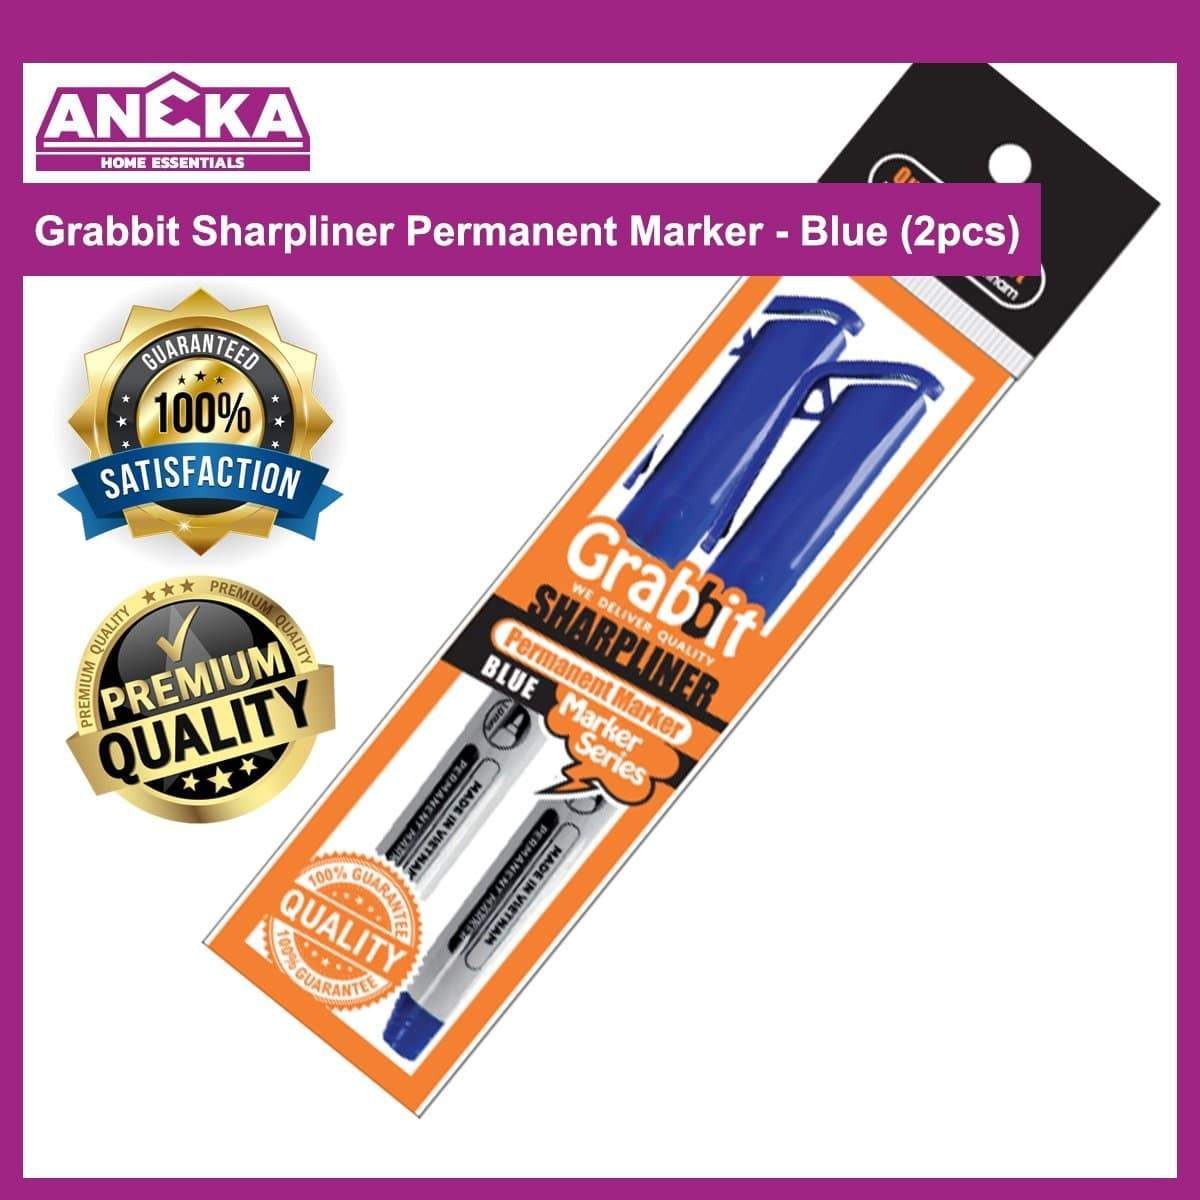 Grabbit Sharpliner Permanent Marker - Blue (2pcs)